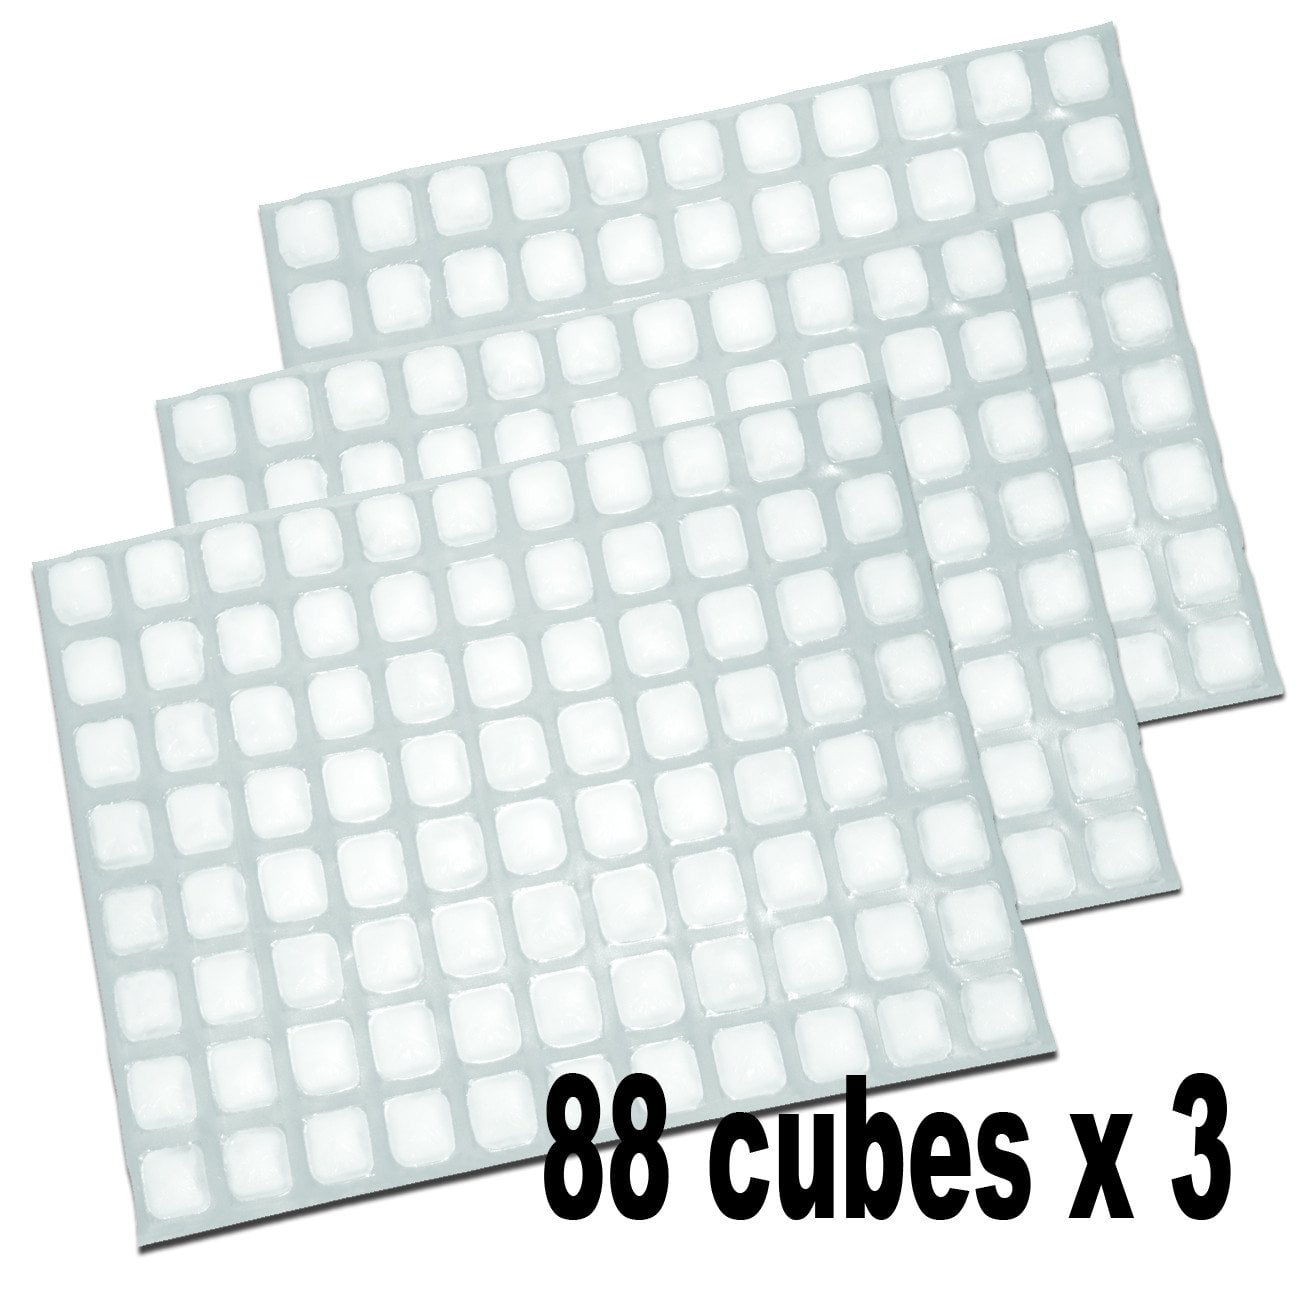 88 Cube refreezable Flexible Chemical-Free FlexiFreeze Ice Sheets 